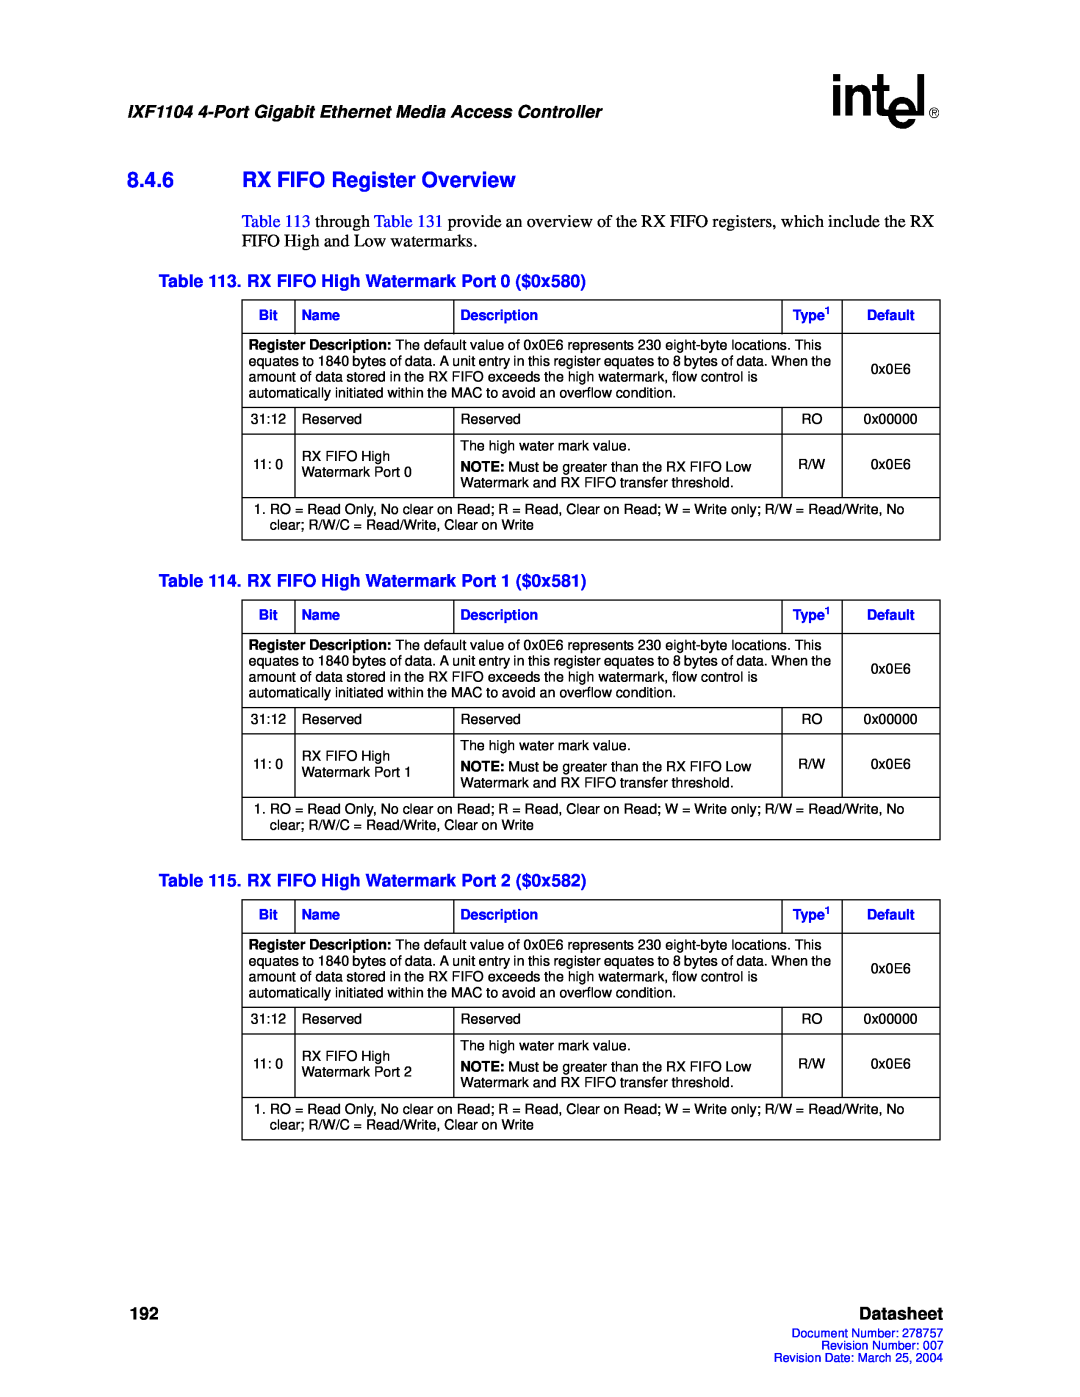 Intel IXF1104 manual 8.4.6RX FIFO Register Overview, Datasheet 